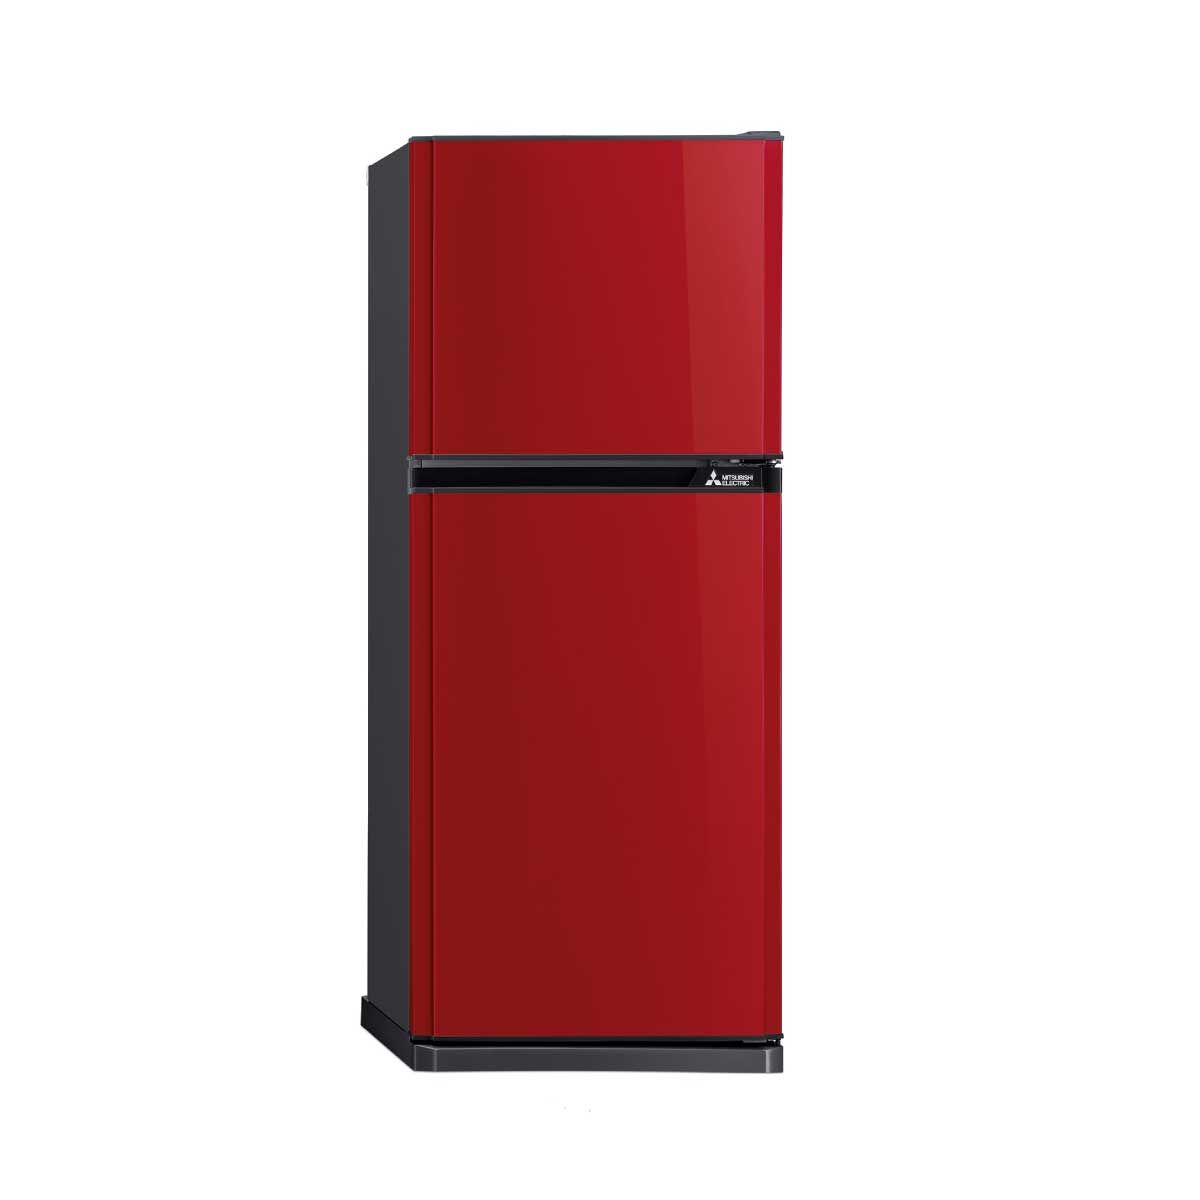 MITSUBISHI ELECTRIC ตู้เย็น2ประตู 7.3คิว สีแดง ไดมอนด์ รุ่นMR-FV22T